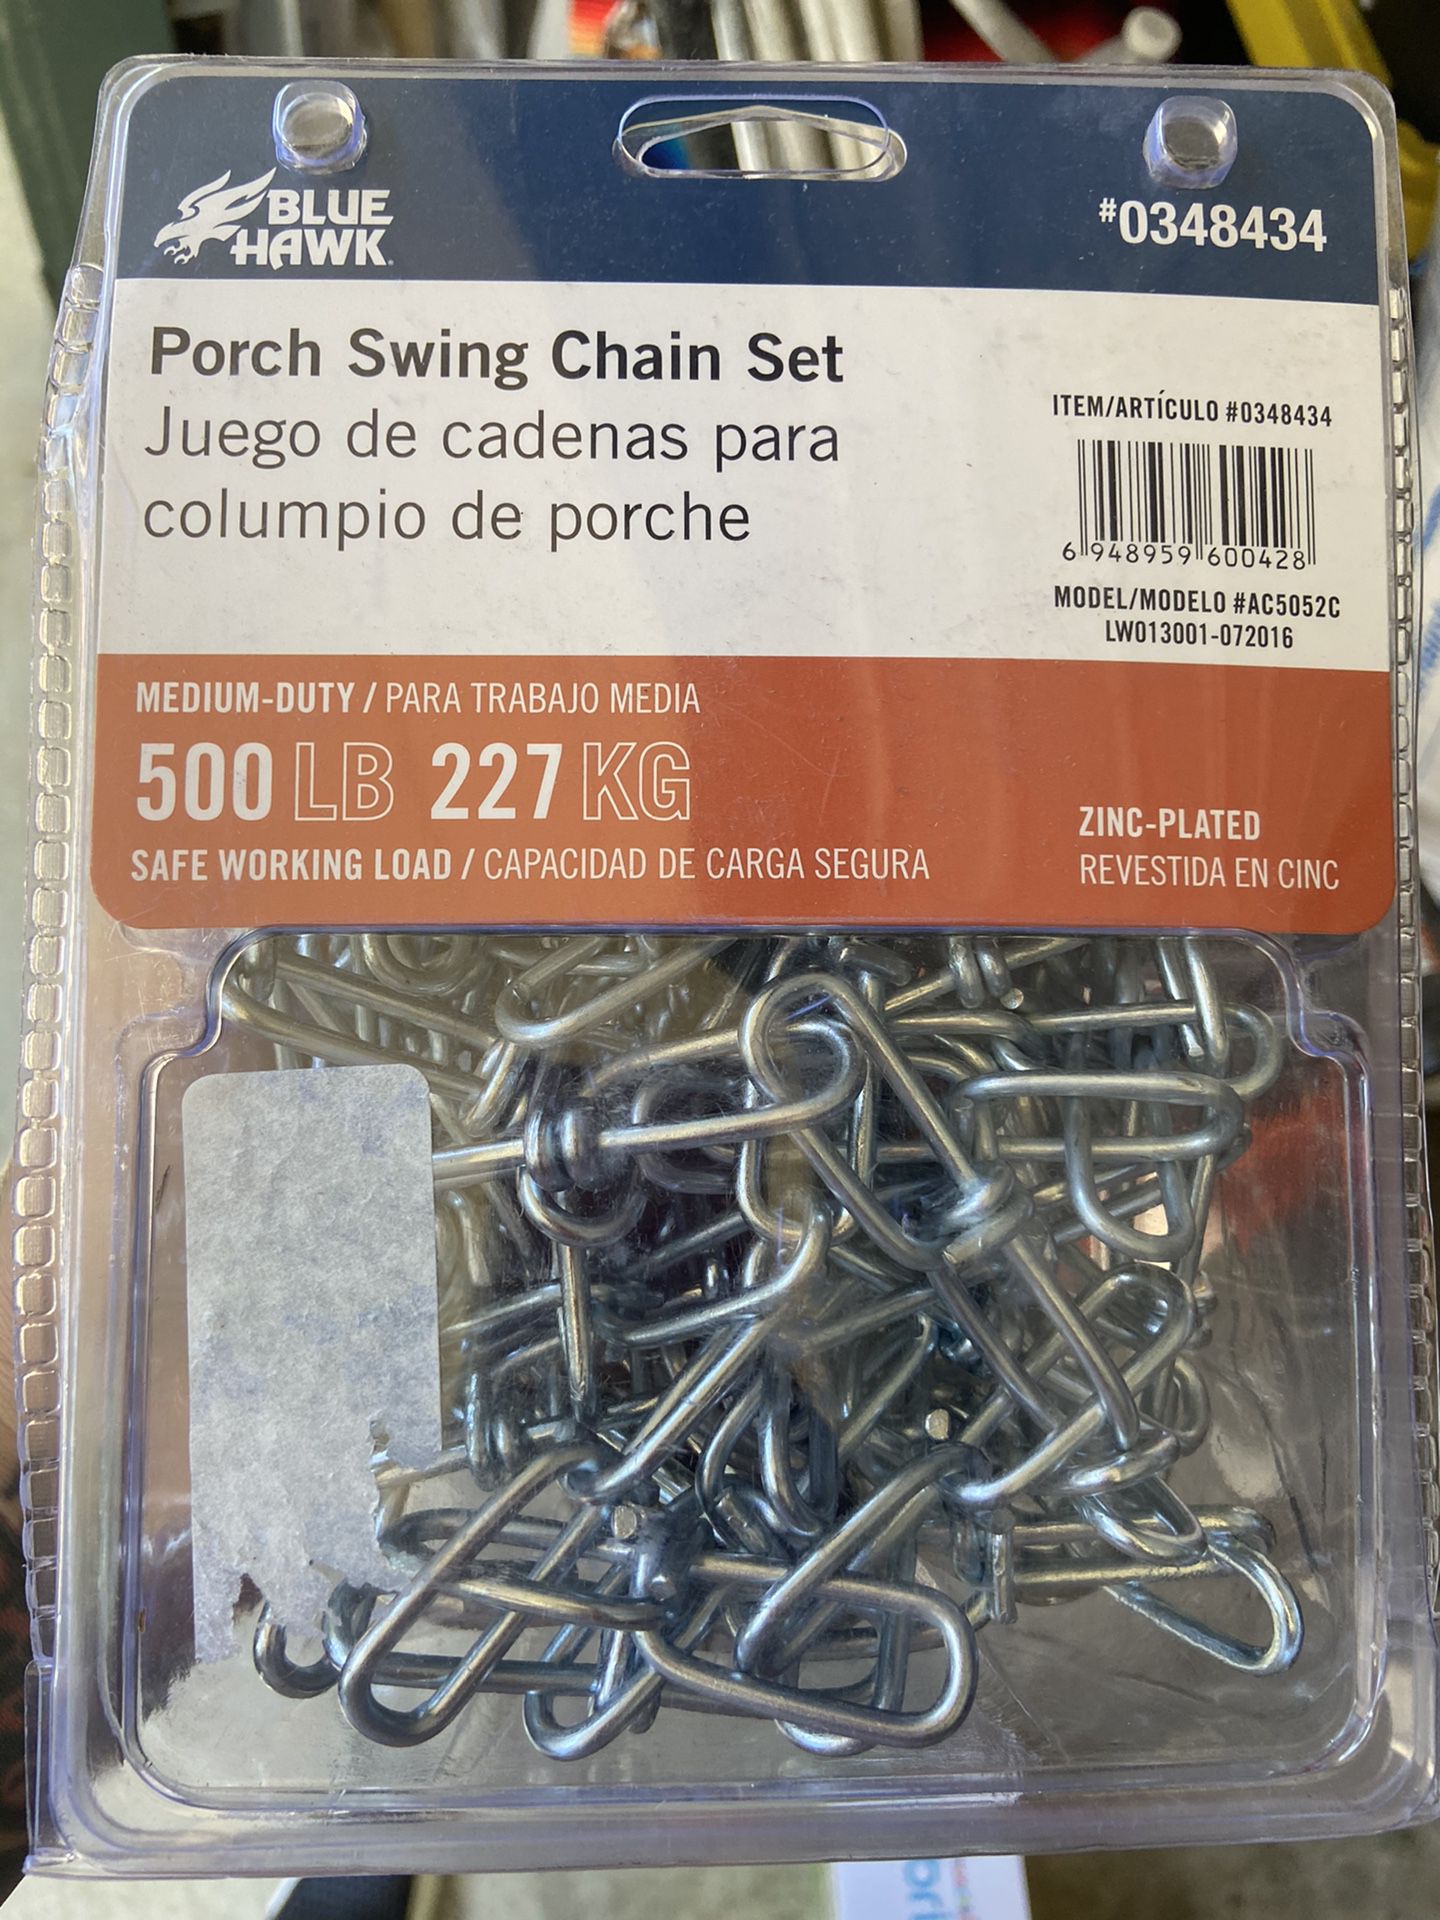 Porch swing chain